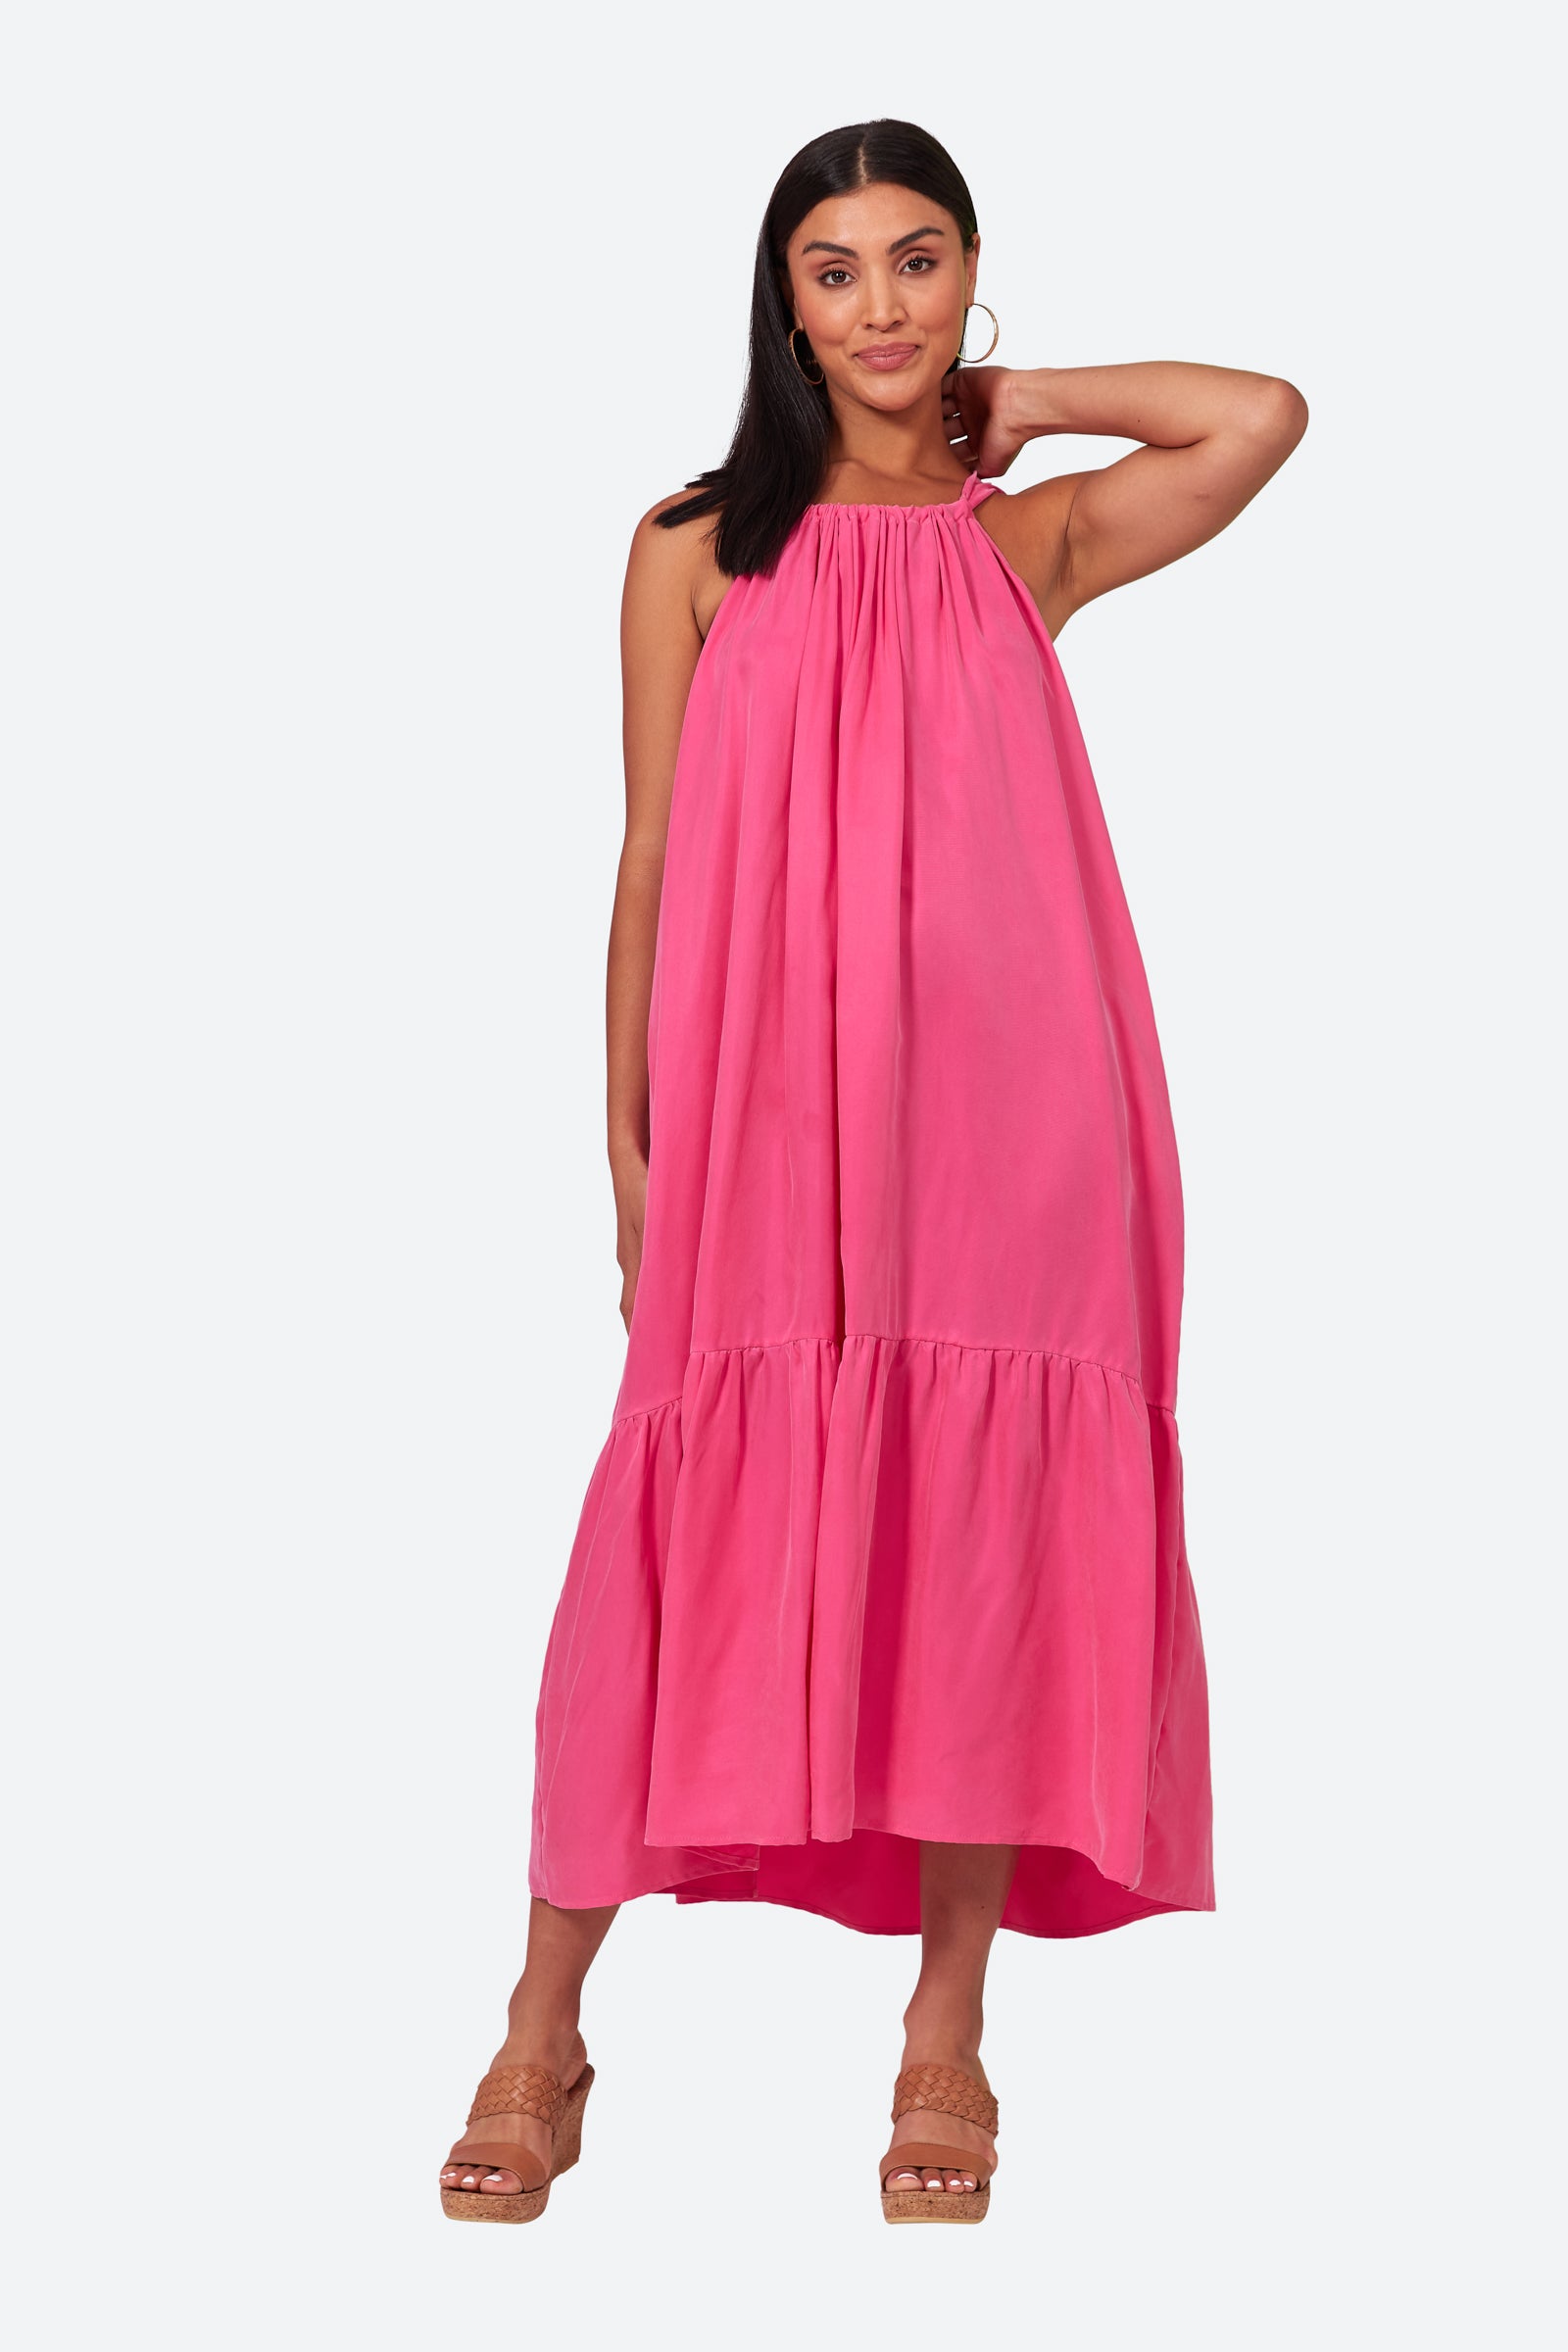 Elixir Tank Dress - Dragonfruit - eb&ive Clothing - Dress Strappy Mid Cupro